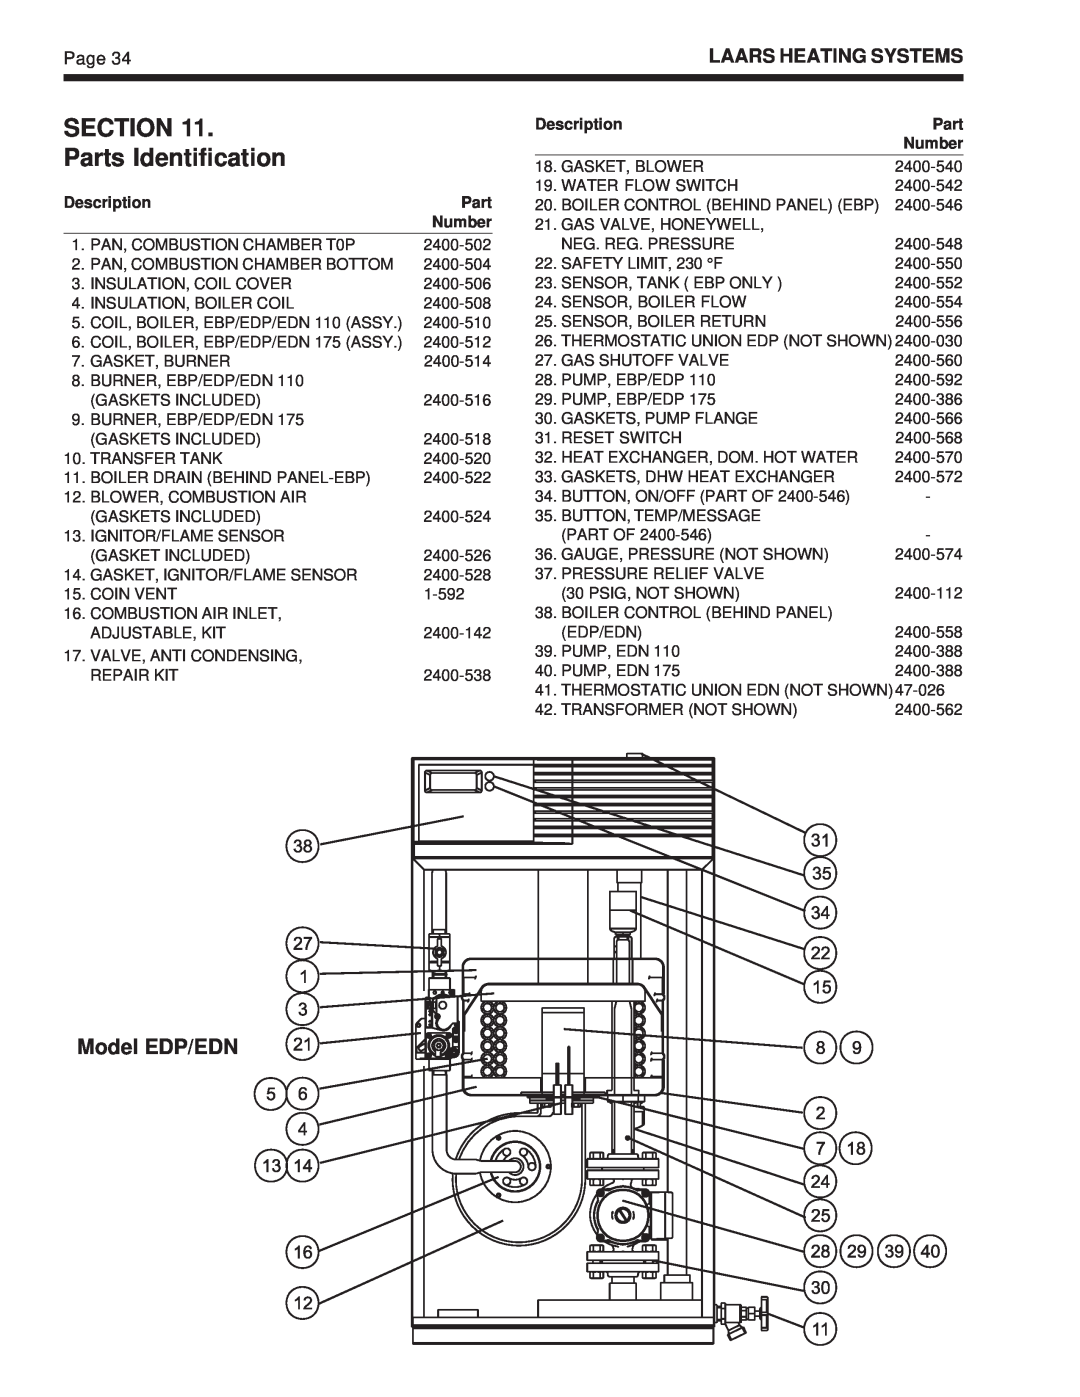 Whirlpool warranty SECTION Parts Identification, Model EDP/EDN 